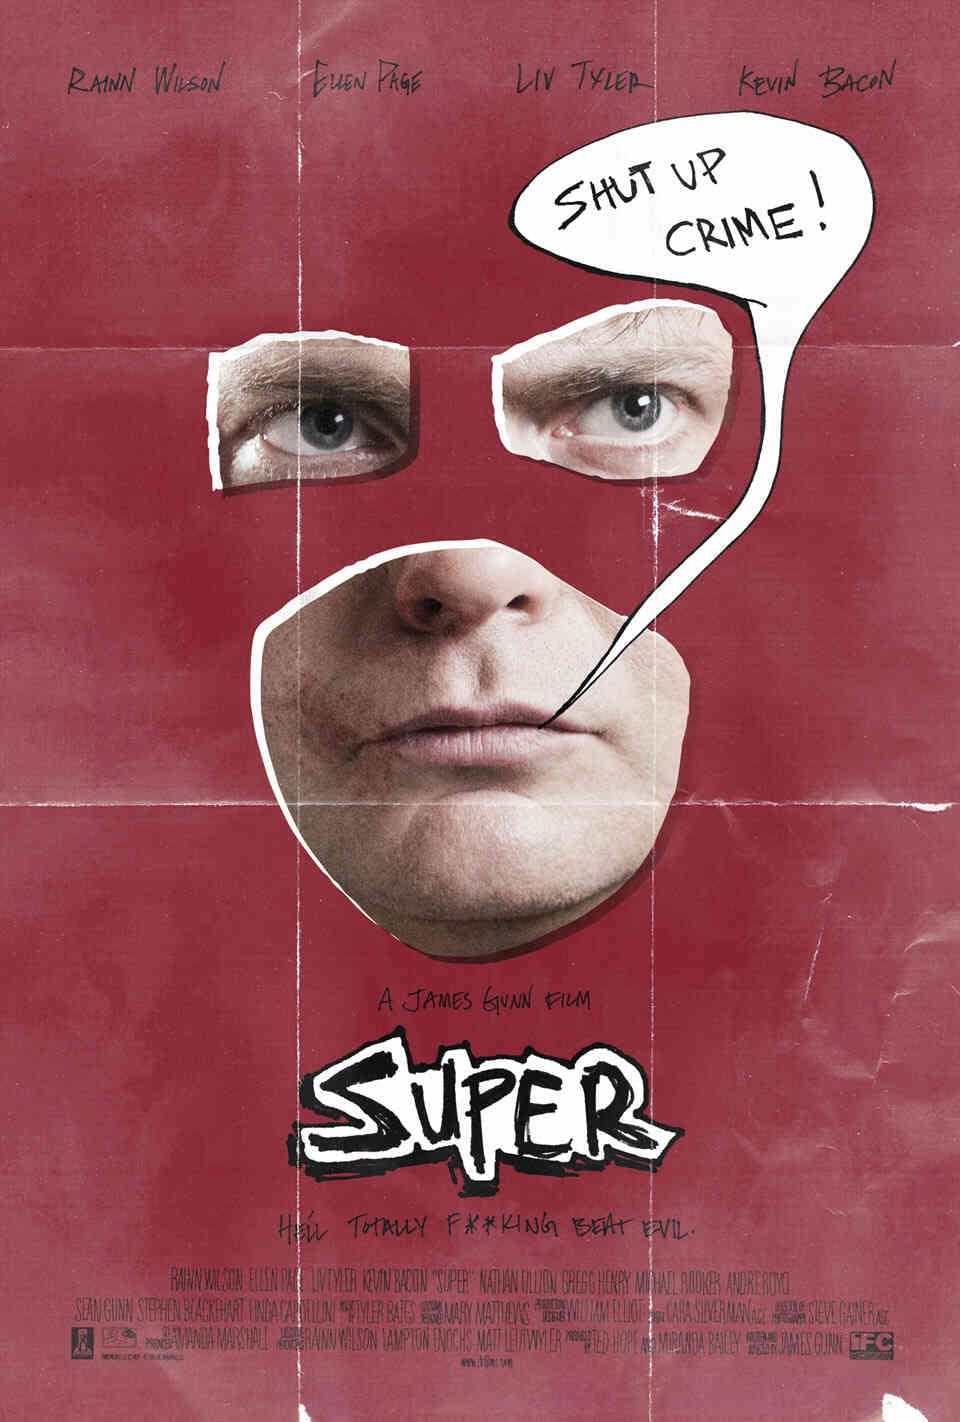 Read Super screenplay (poster)